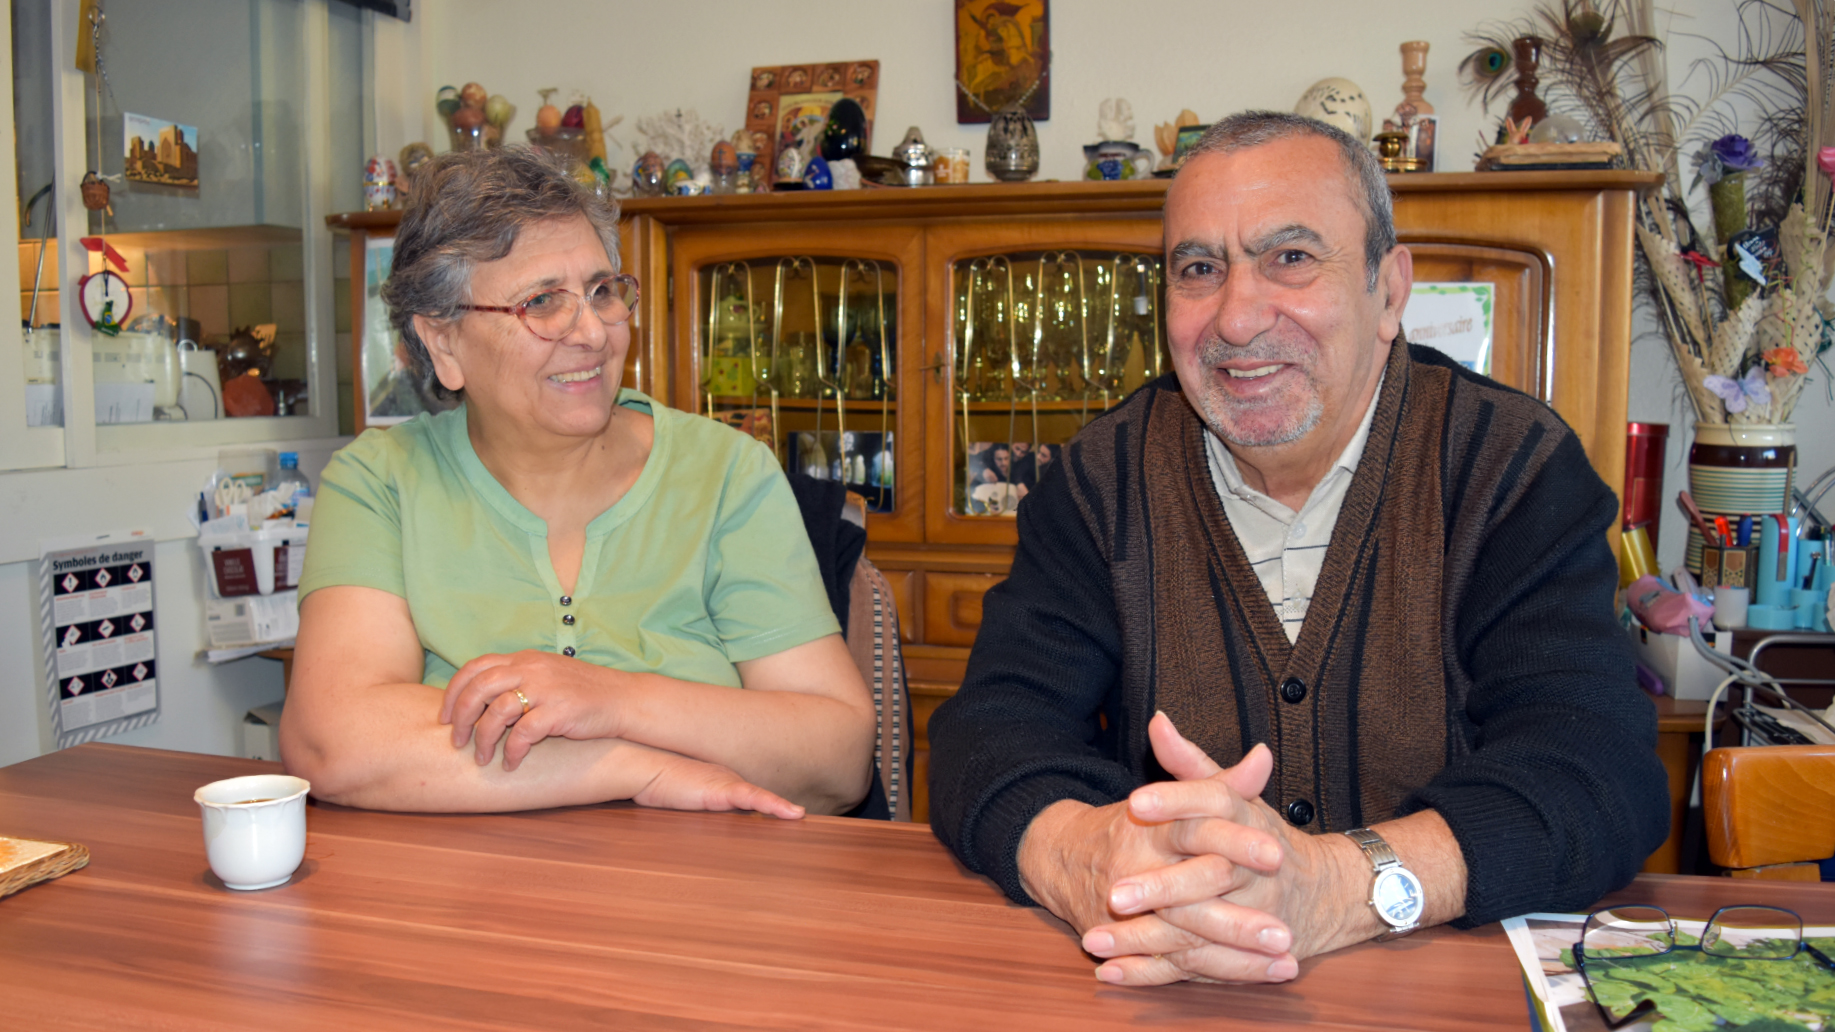 Naji et Jamileh Awad, fondateurs de l'association "Aider Beit Sahour" (Photo: Jacques Berset)